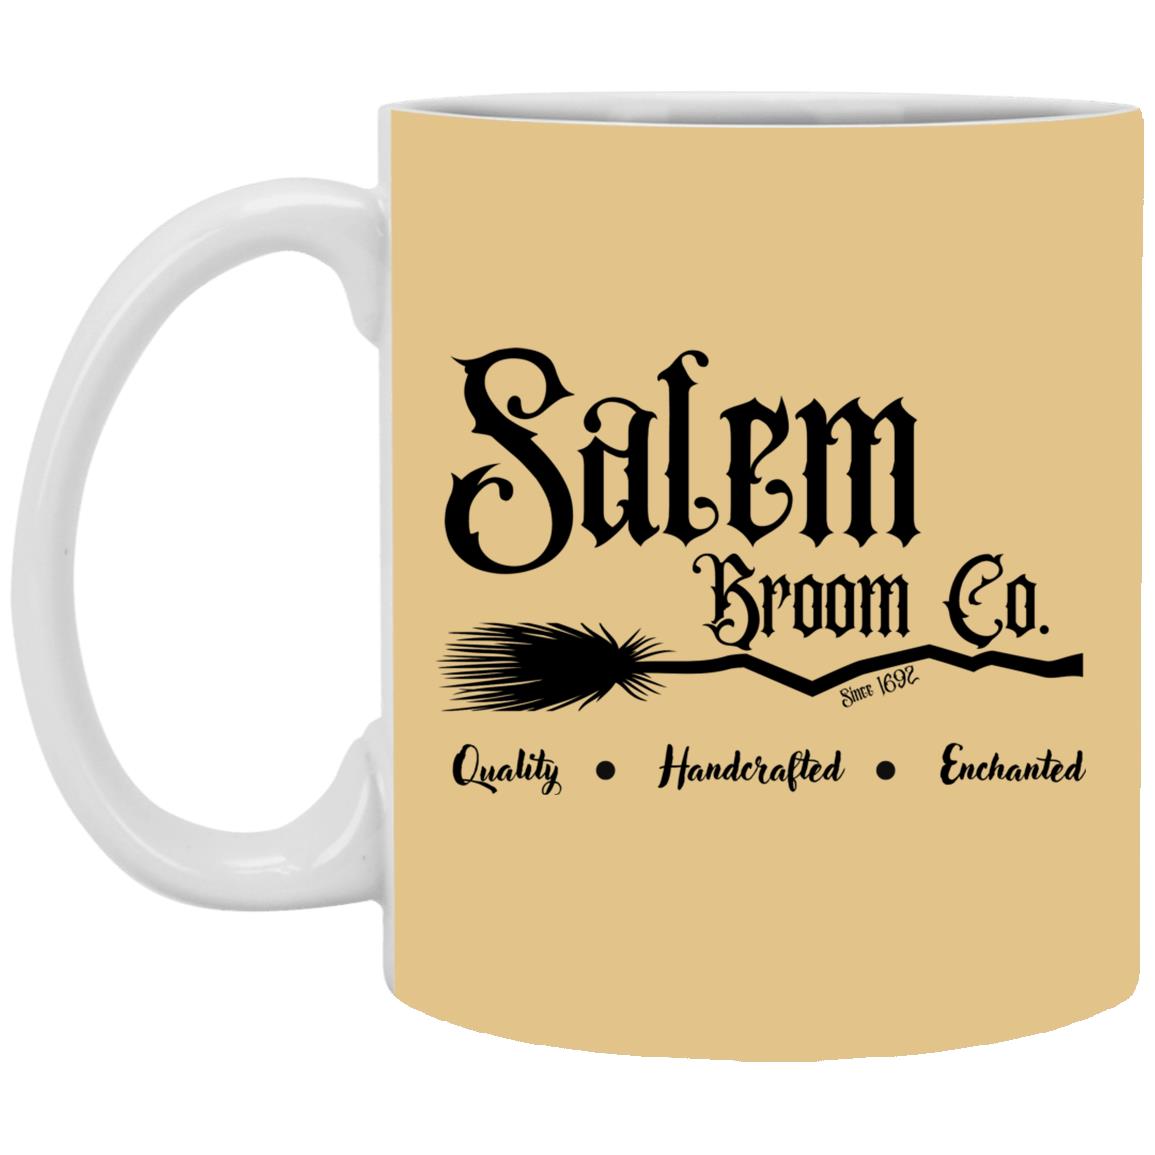 Salem Broom Co - Halloween - XP8434 11 oz. White Mug